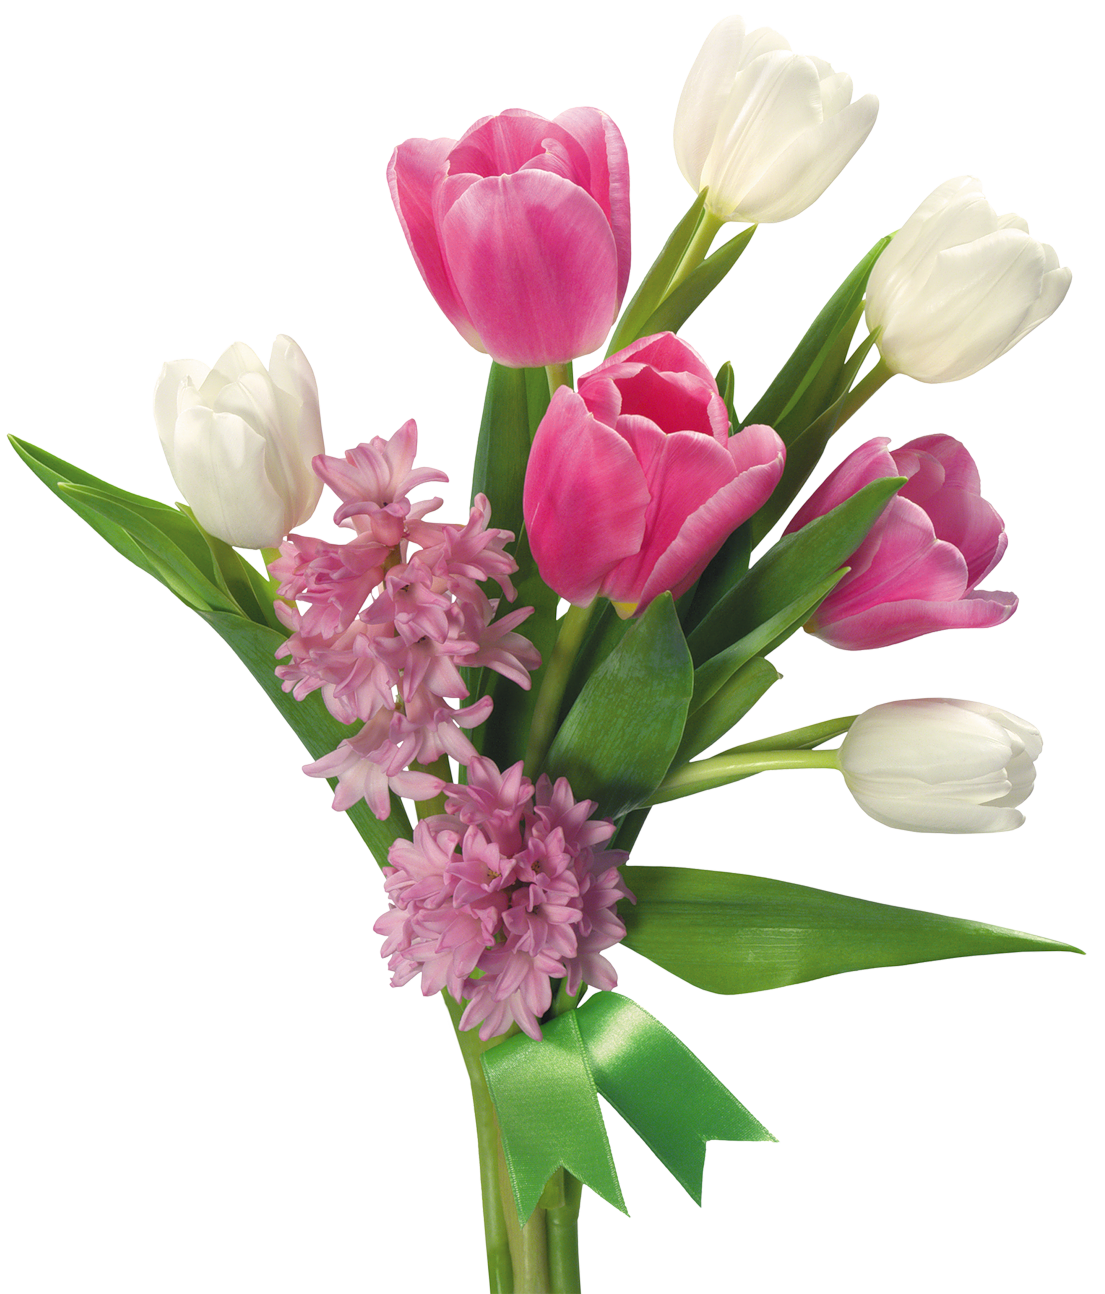 flower bouquet clip art free download - photo #20